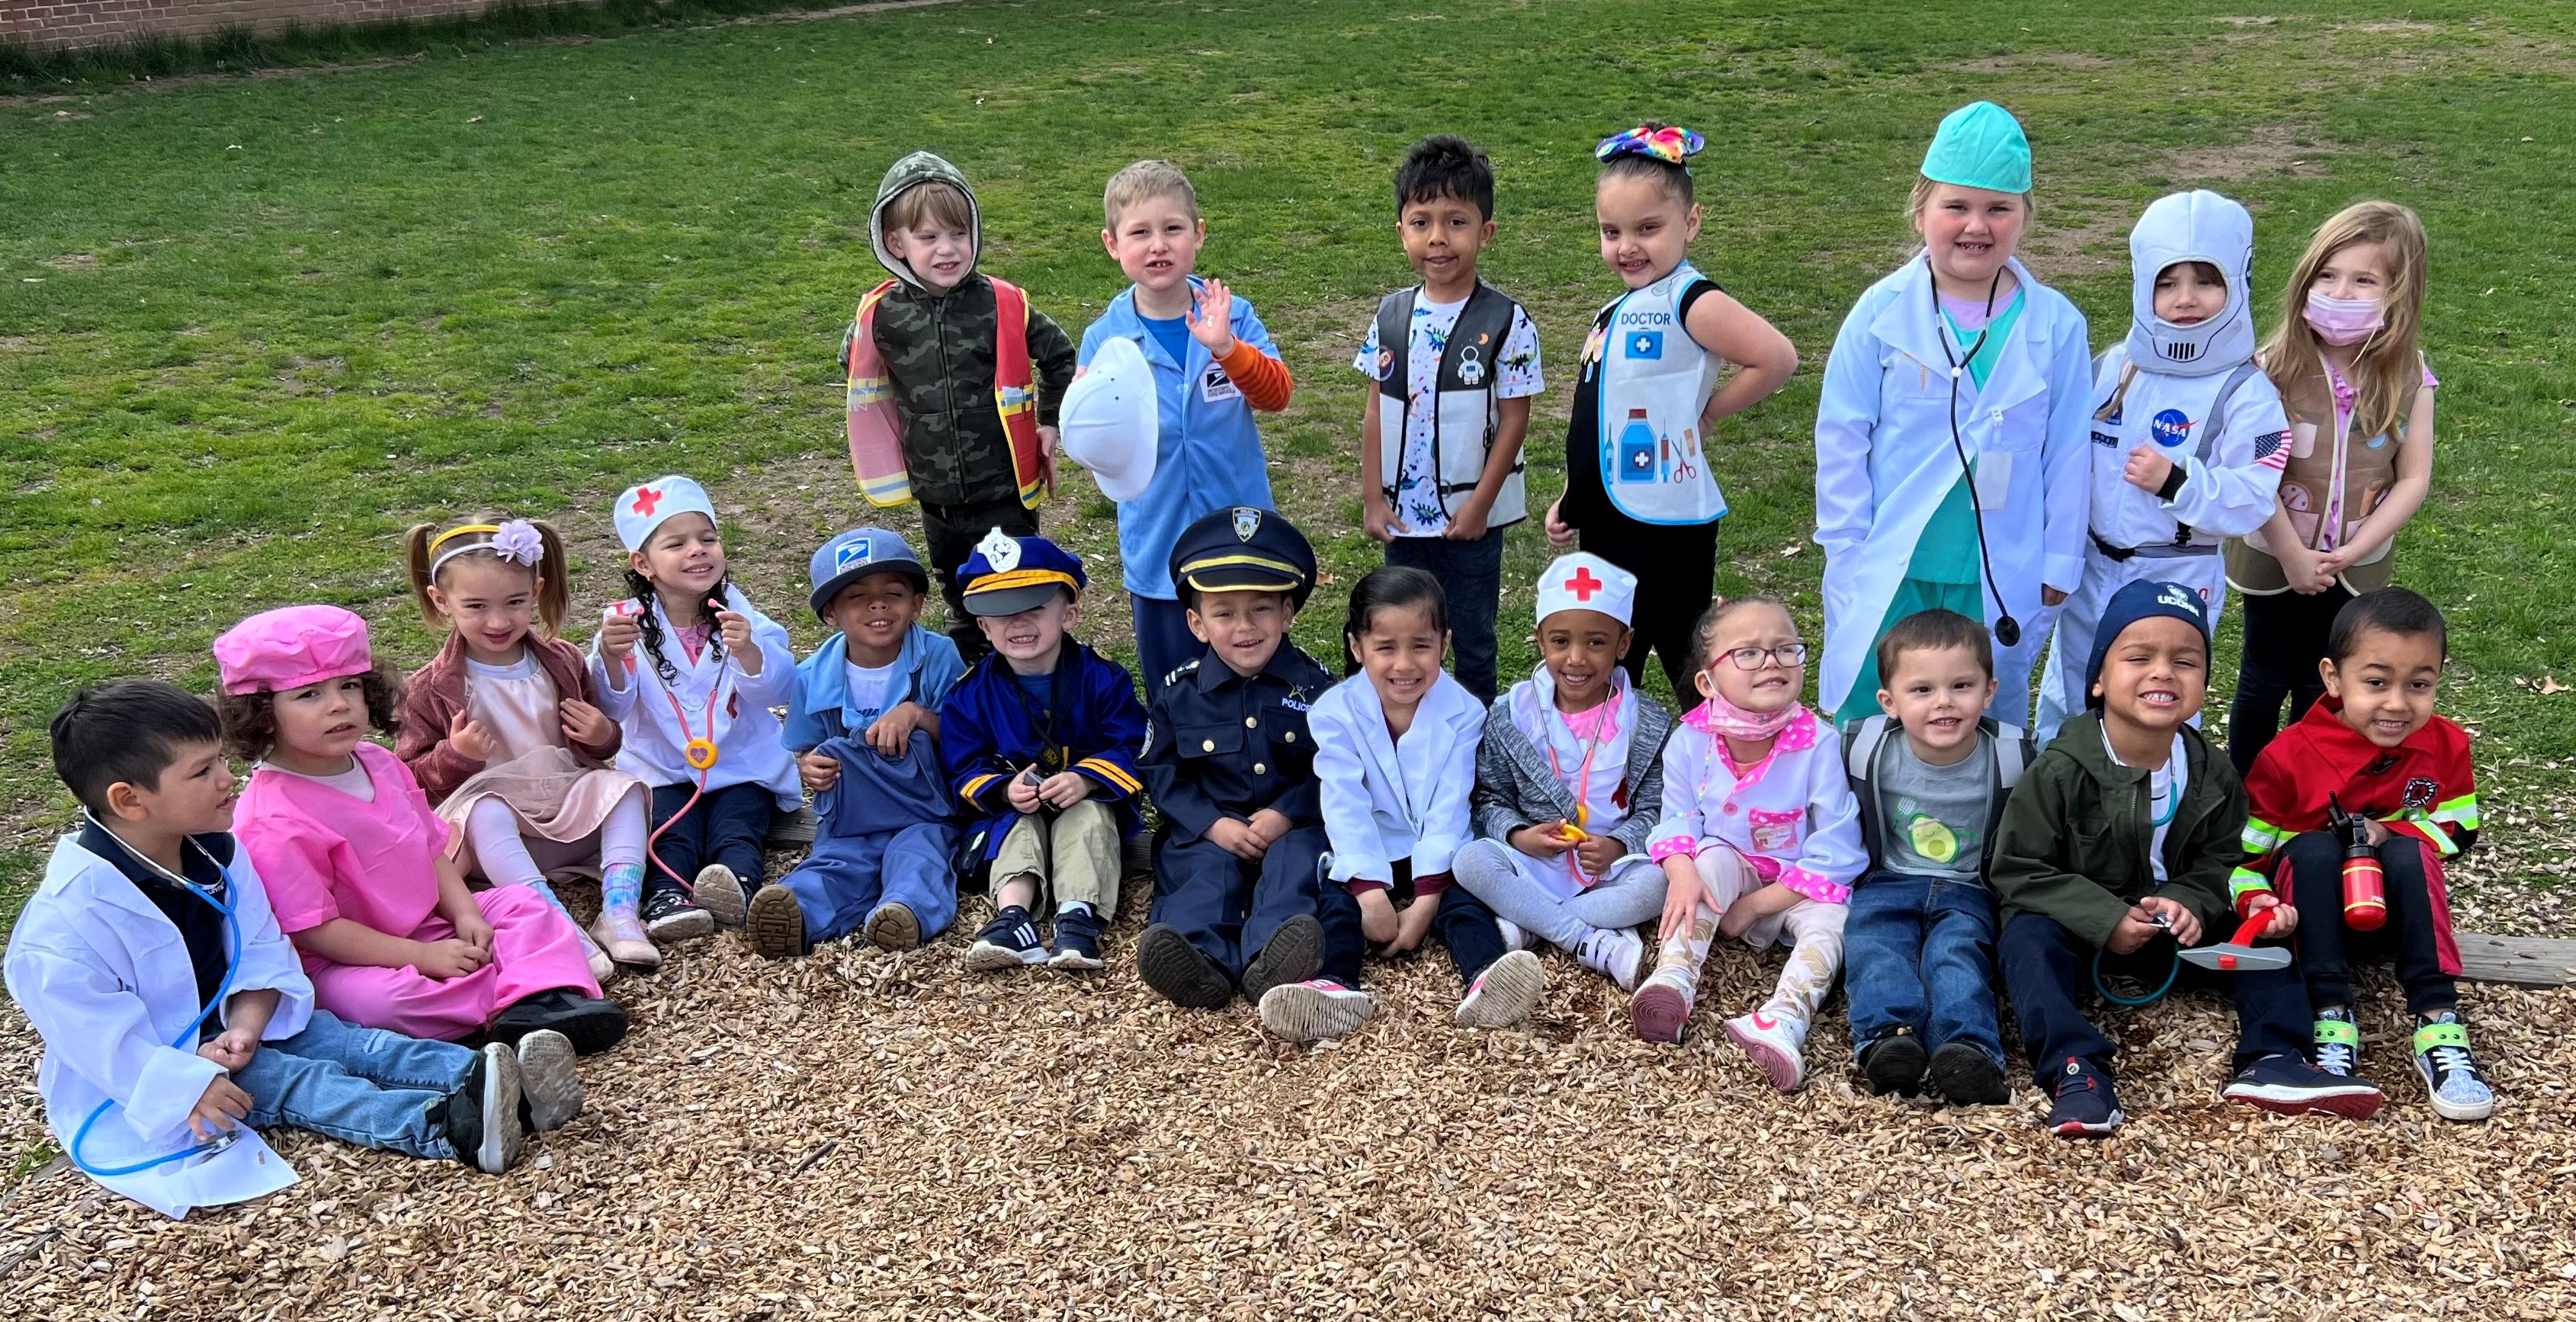 Hanover Hounds Preschool students dressed as community helpers